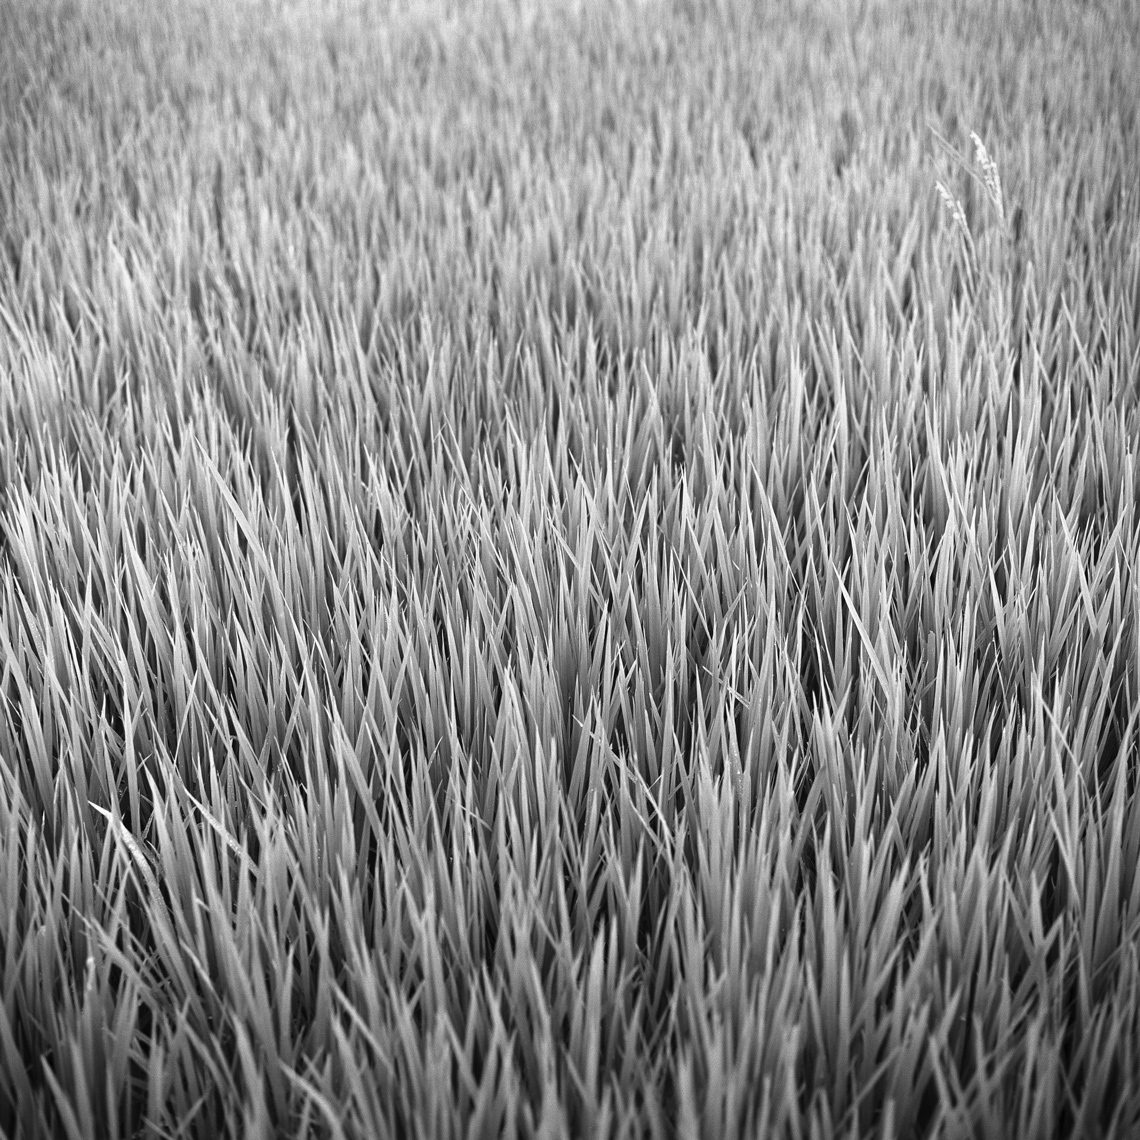 _Rice field